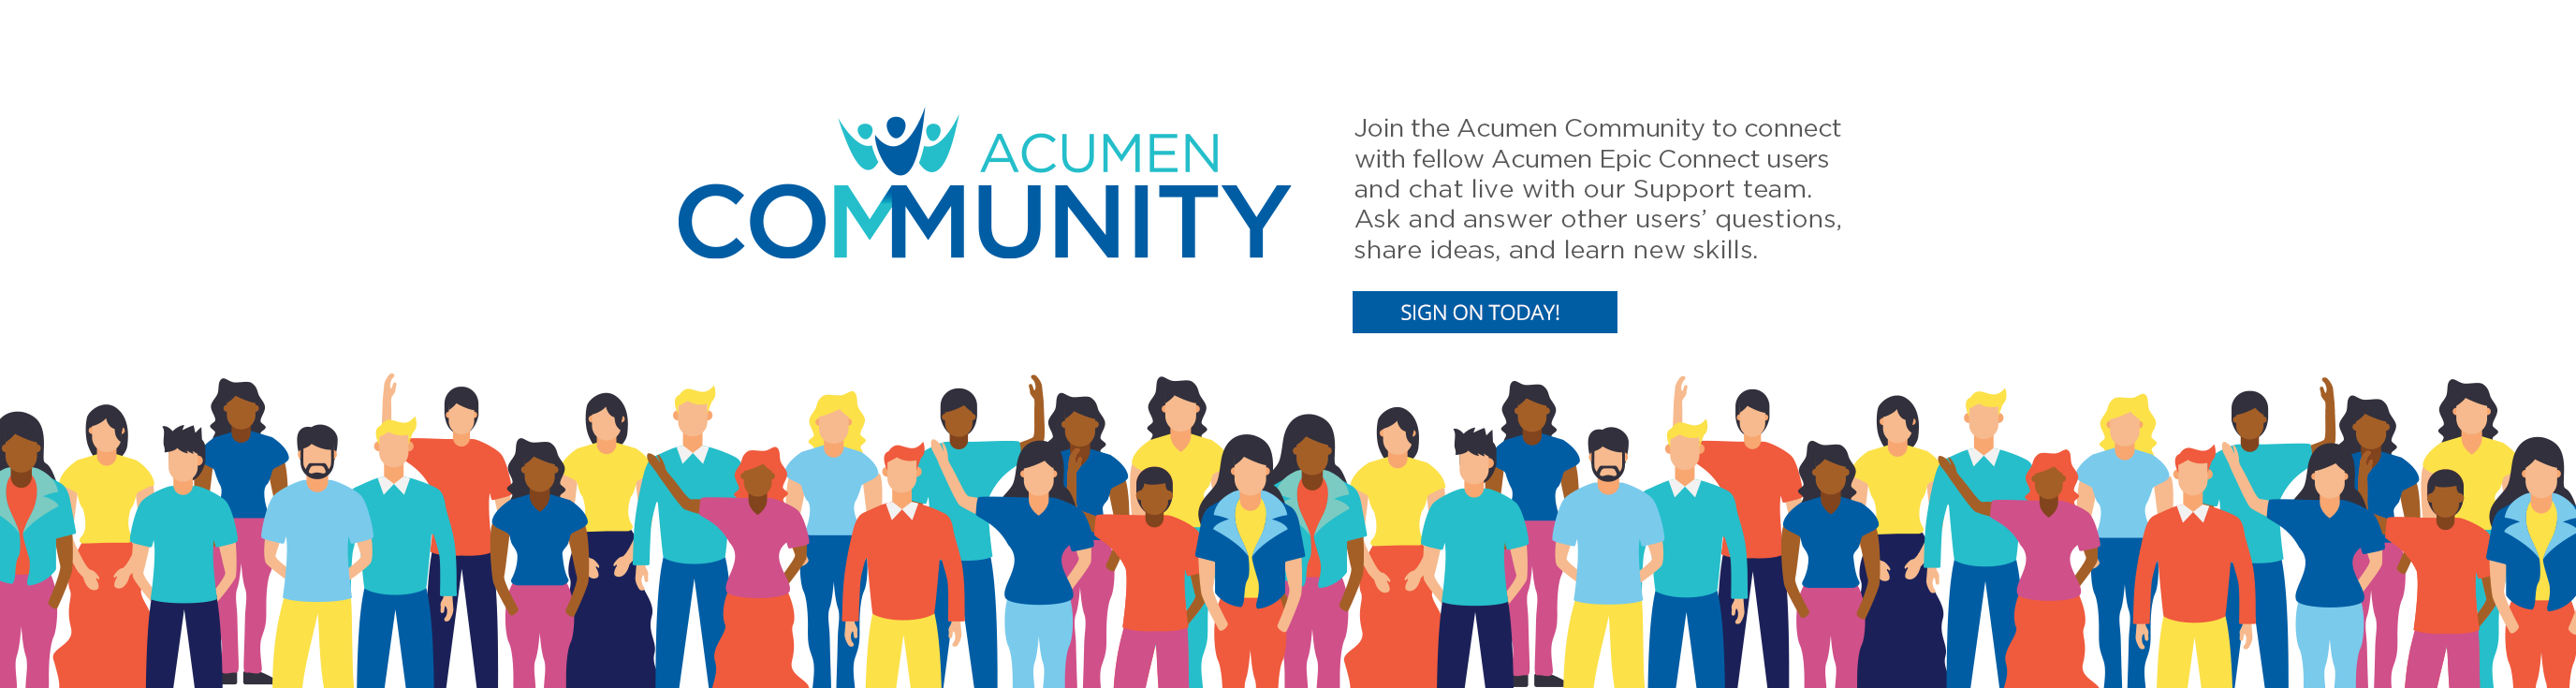 Acumen Customer Community